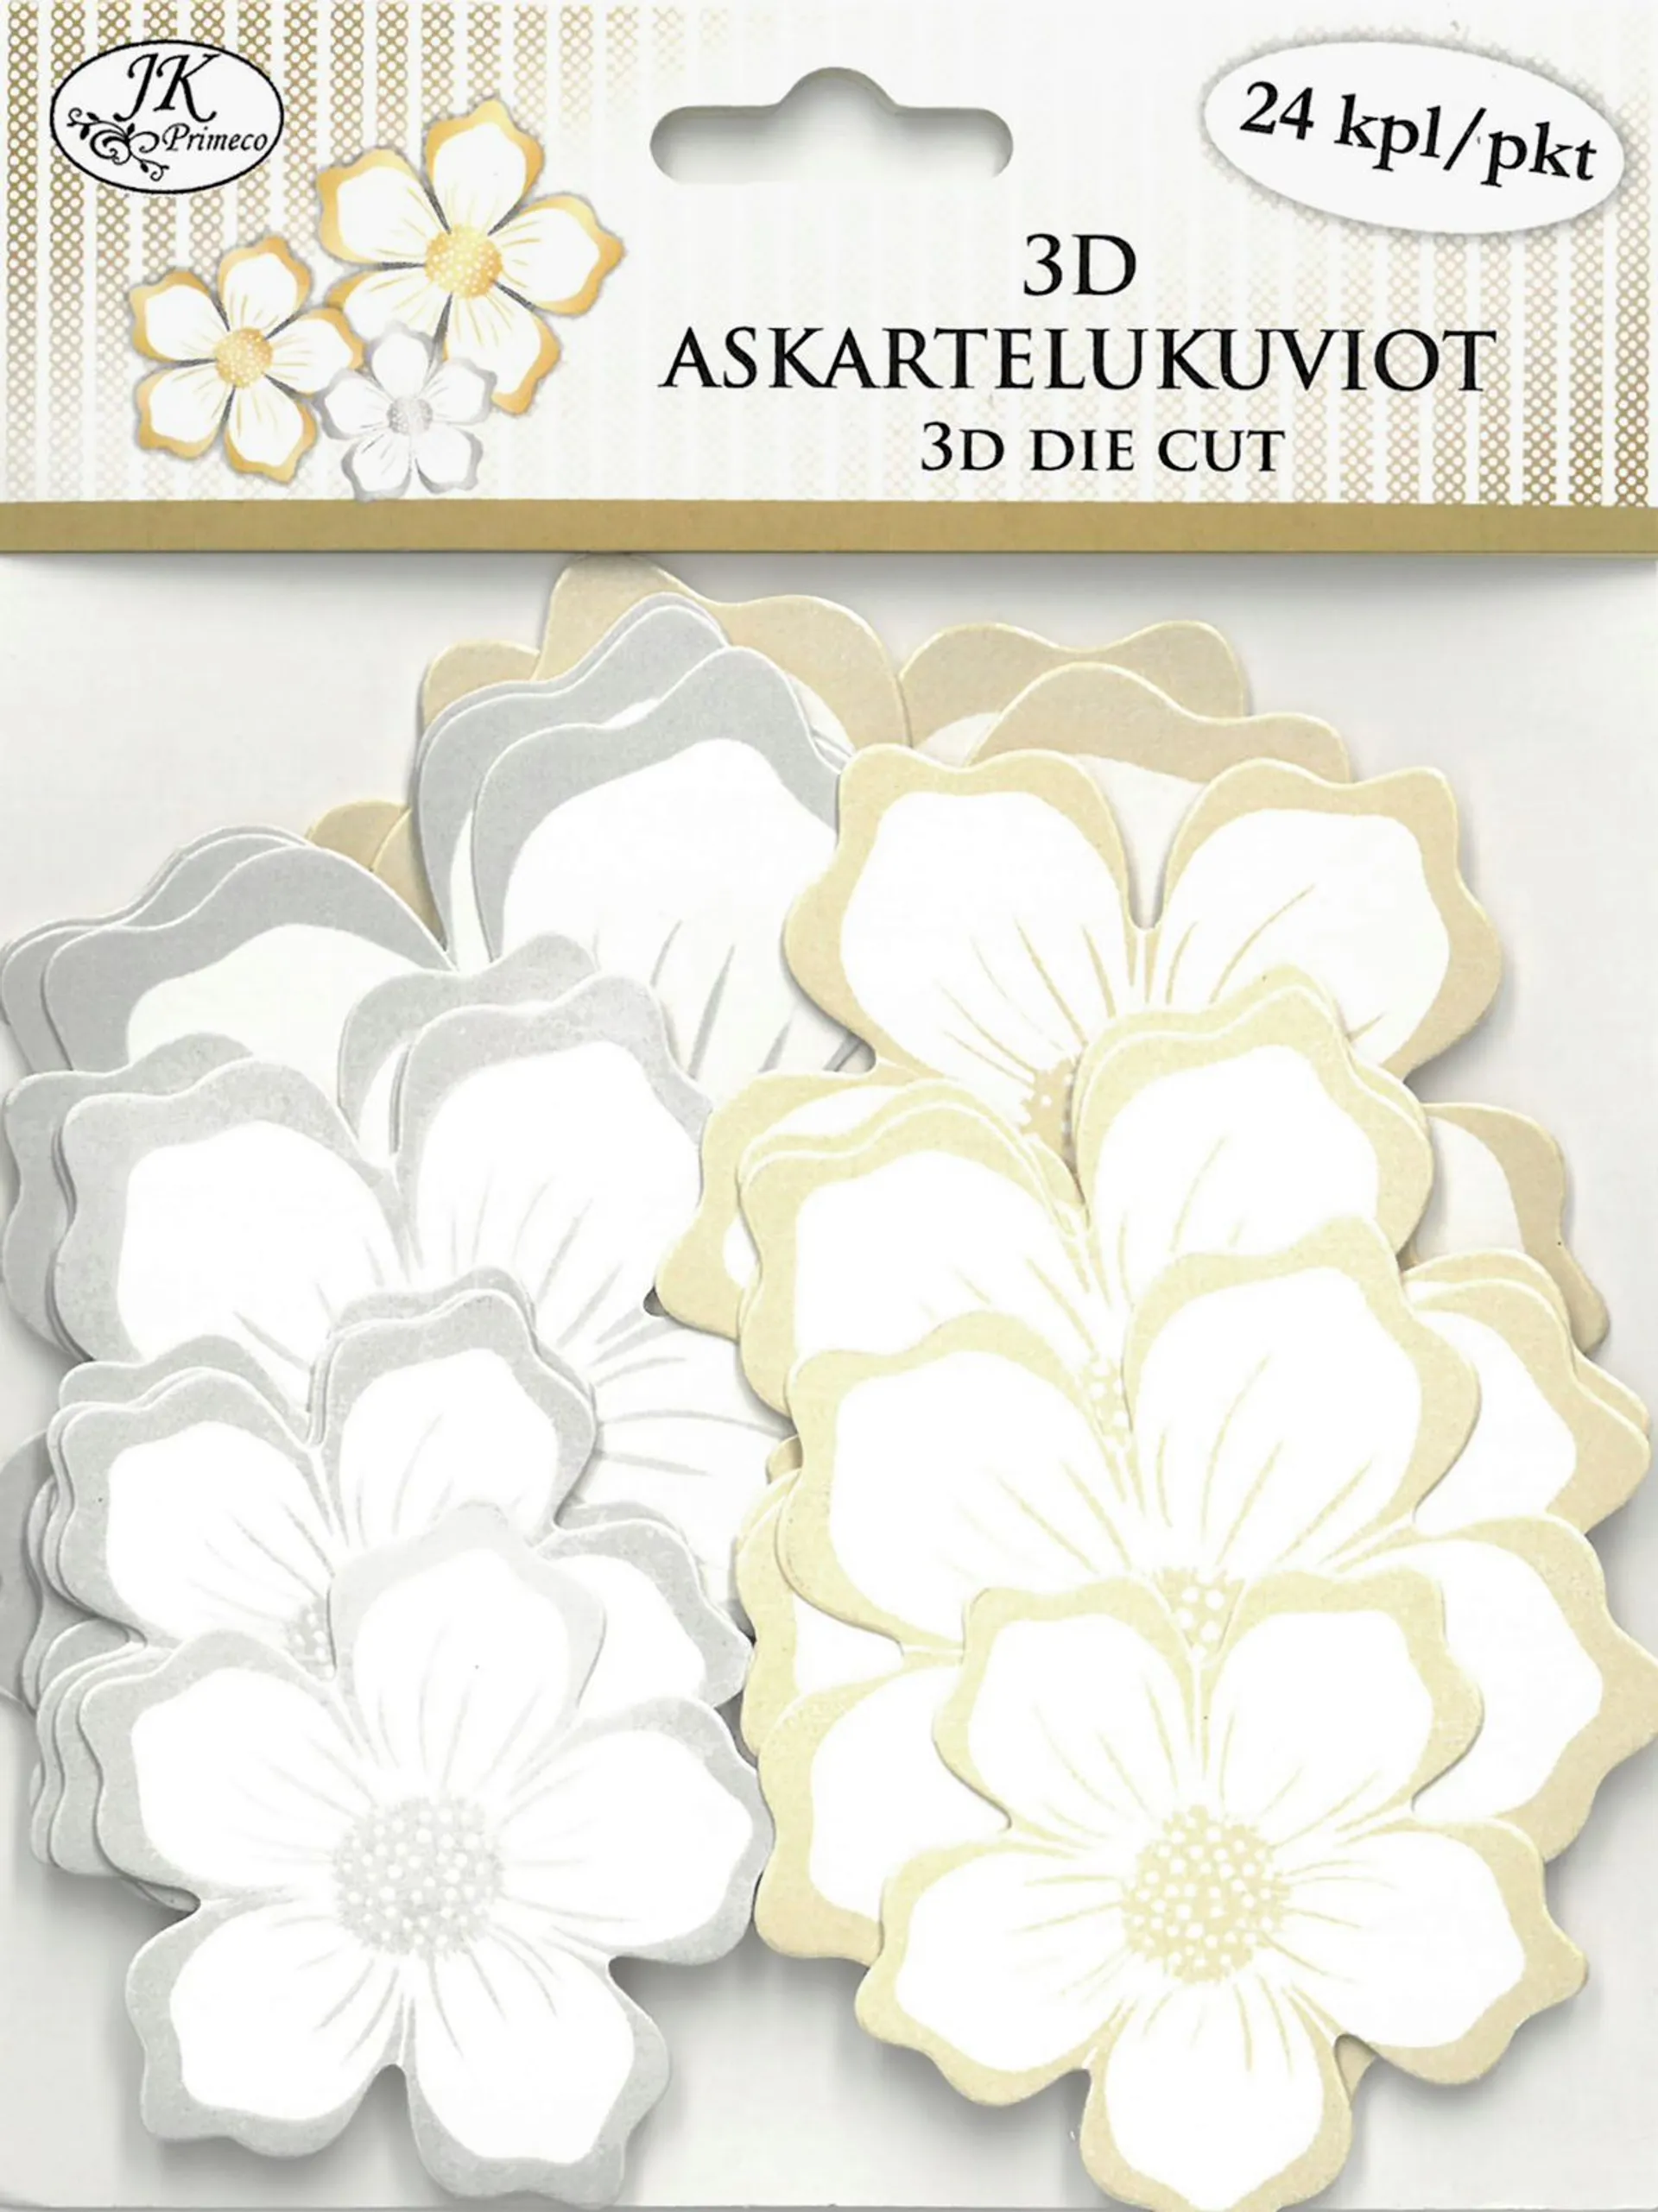 J.K. Primeco 3D askartelukuviot kukka valkoinen 24kpl/pkt - 1